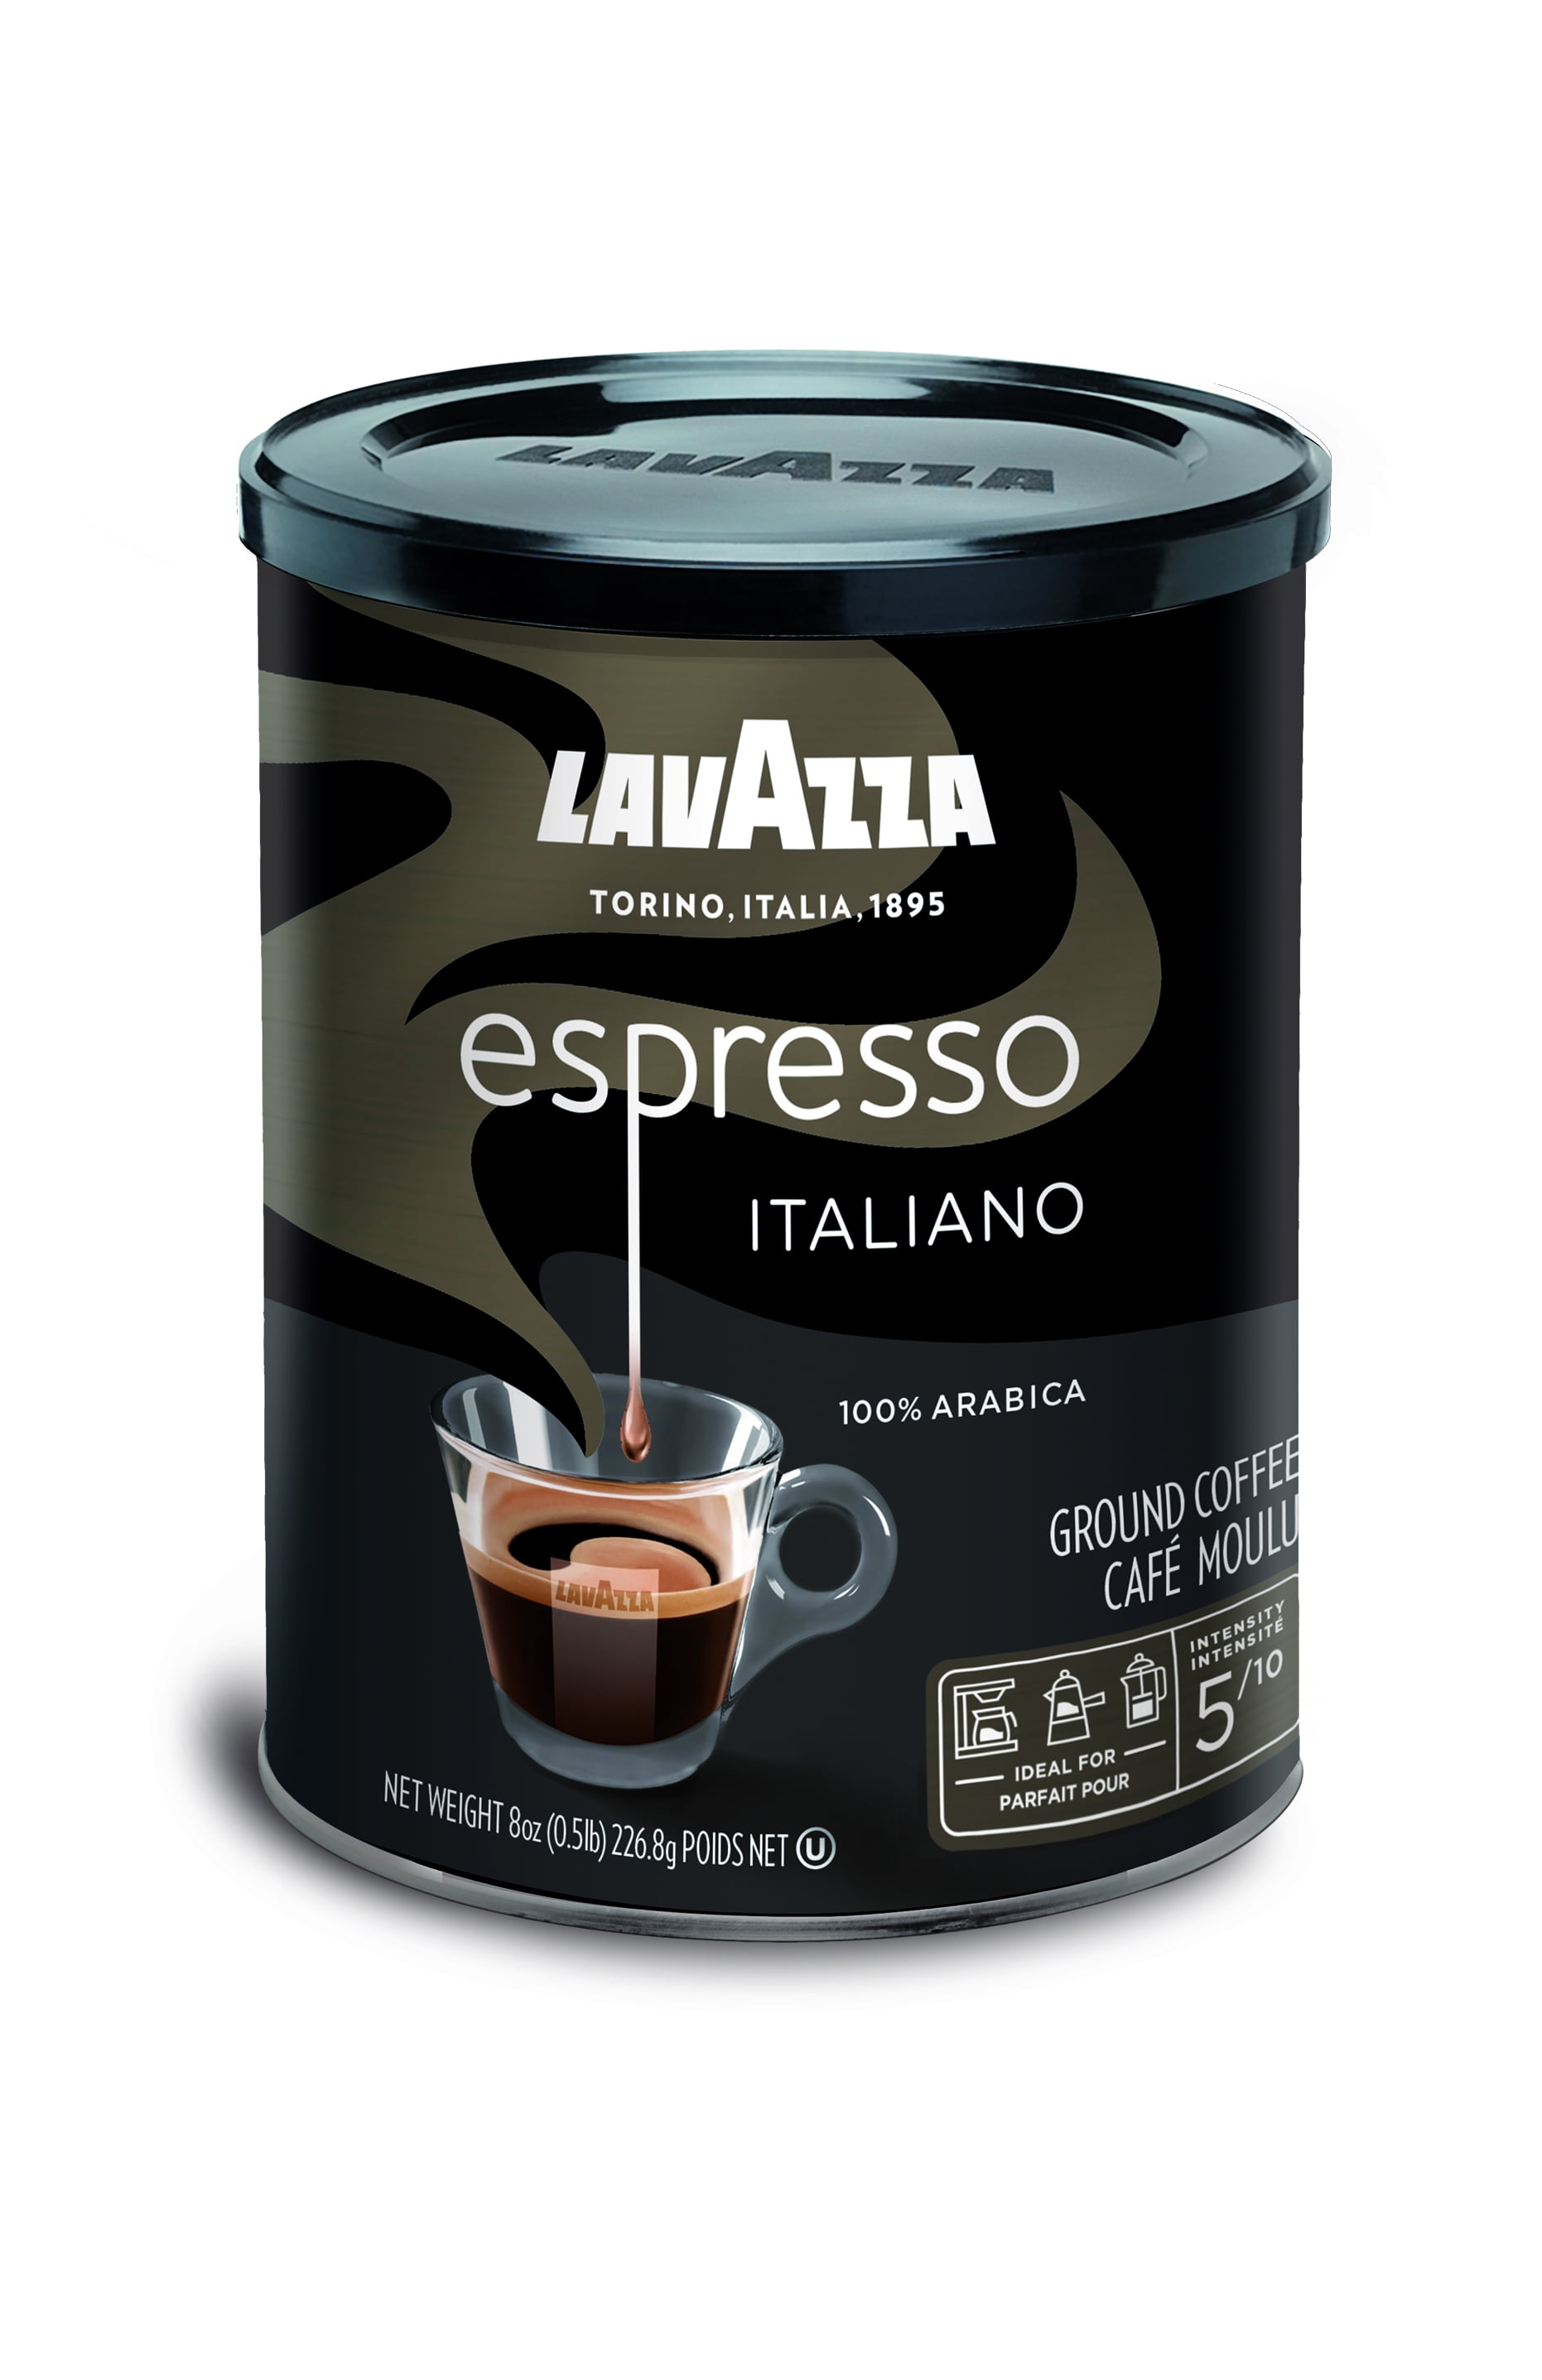 Lavazza Espresso Italiano Ground Coffee Blend, Medium Roast, 8